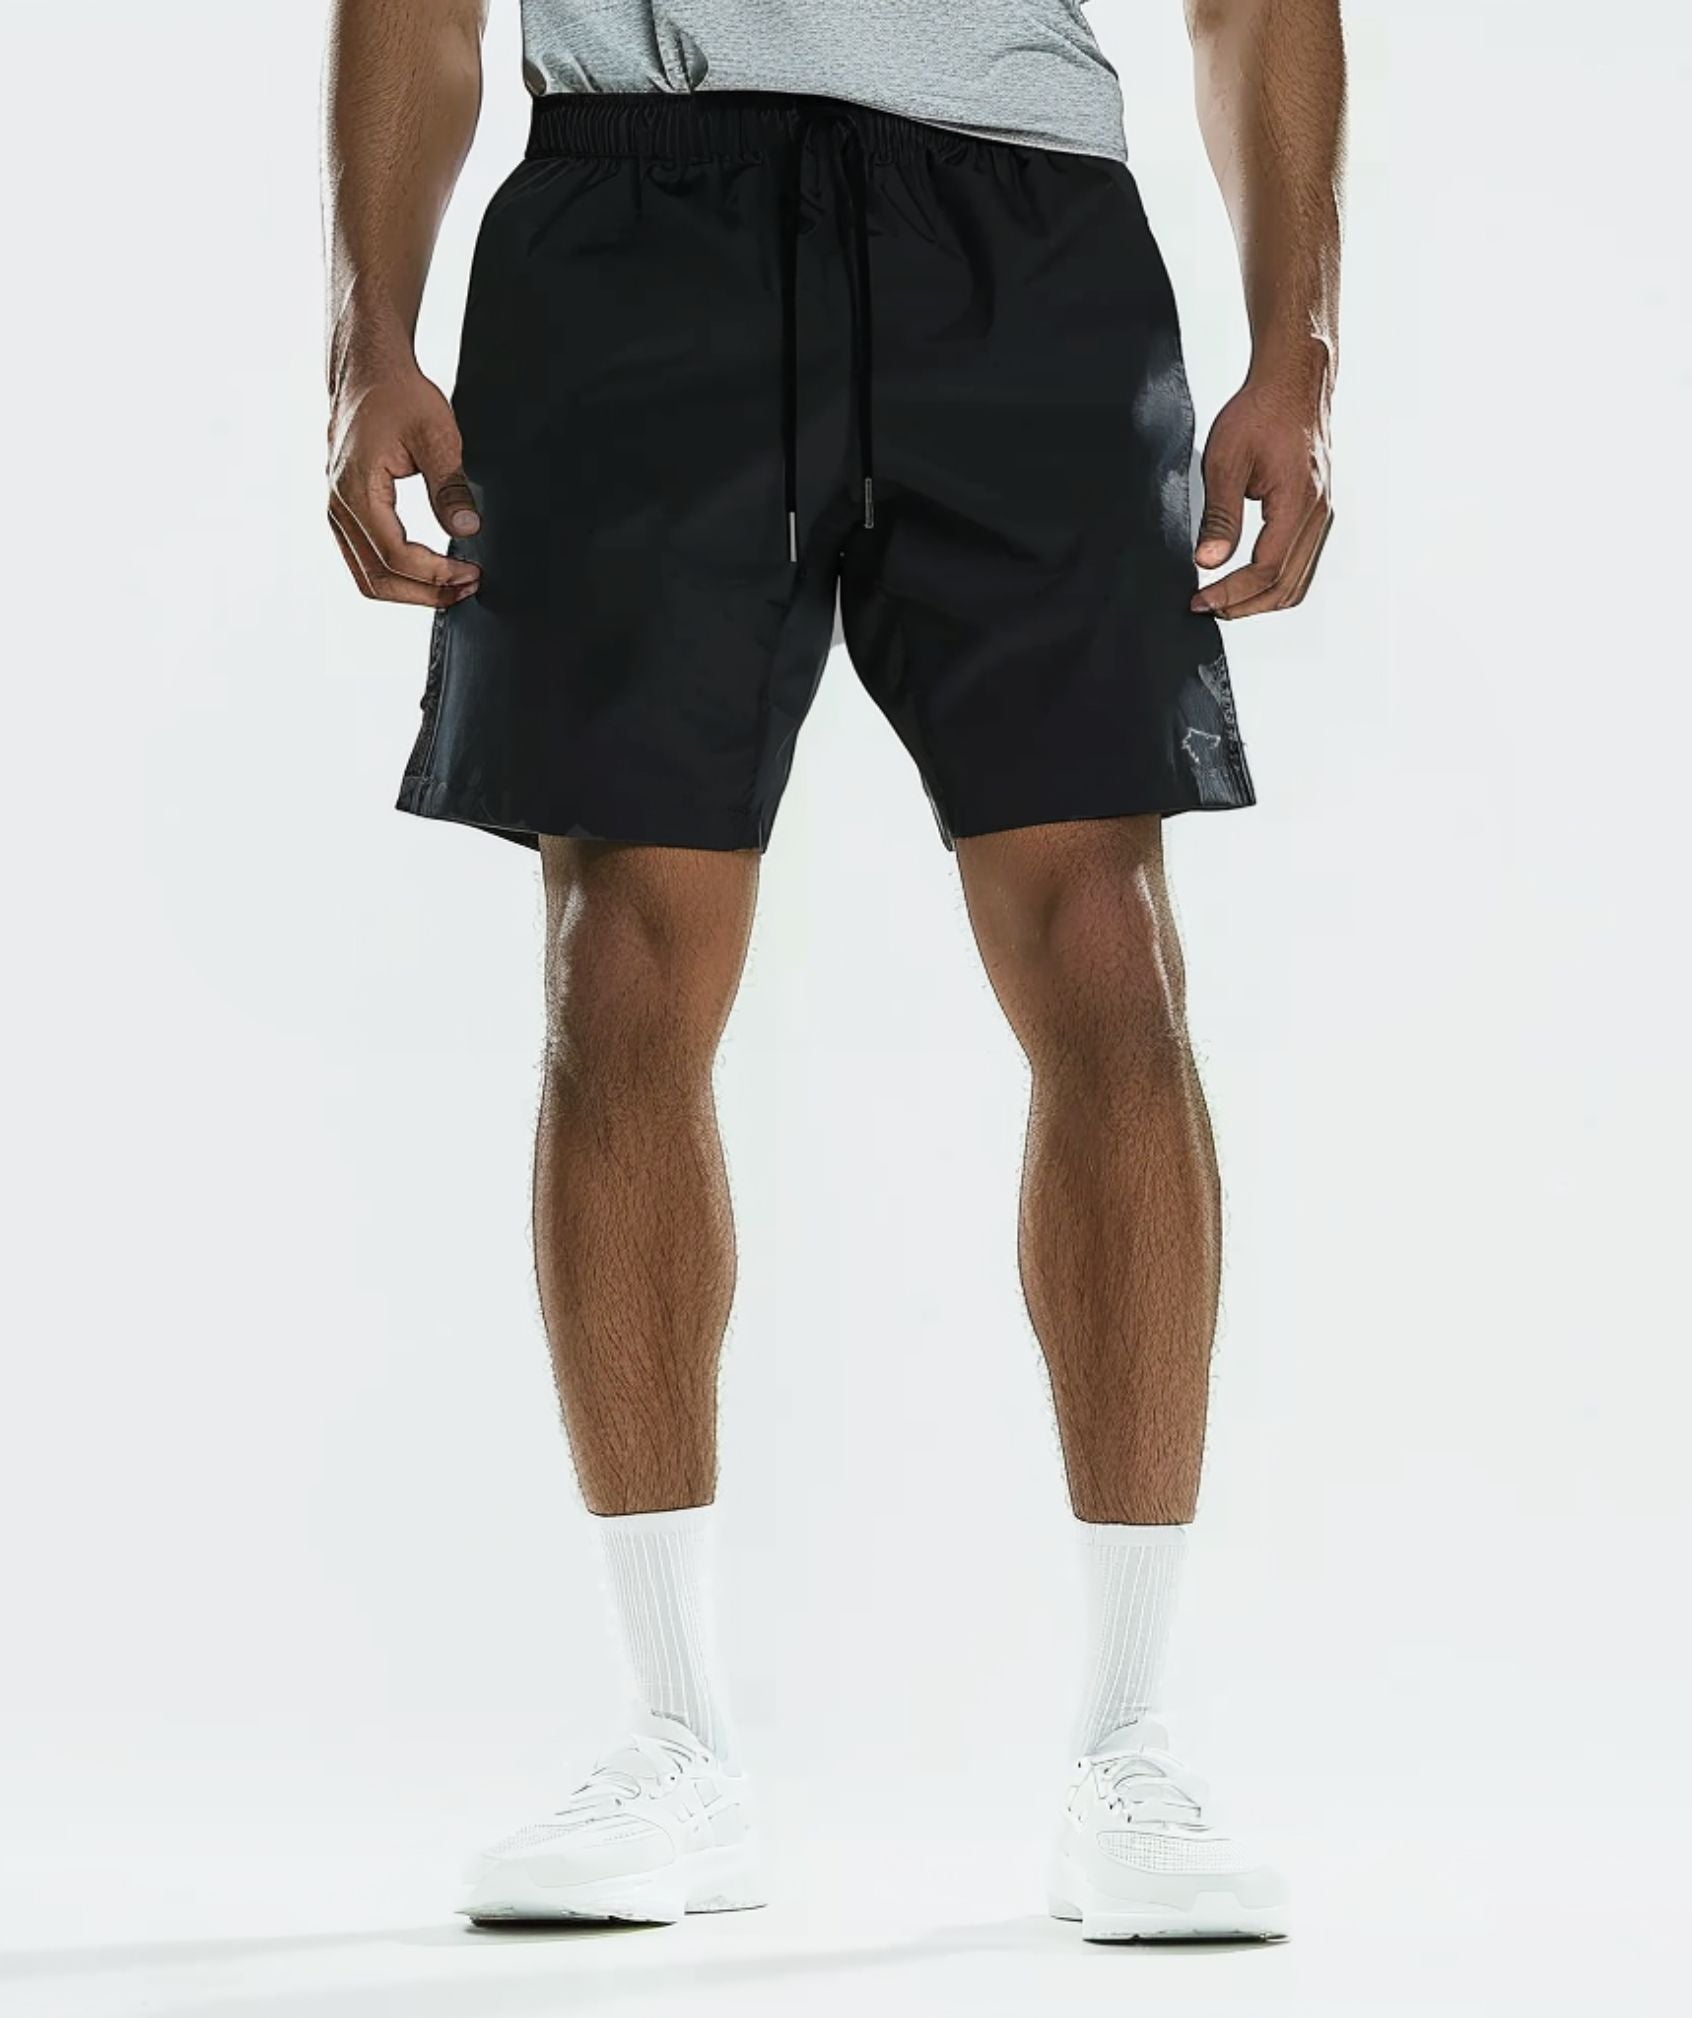 Apex™ black Pinnacle Shorts front view - eco-friendly and durable shorts